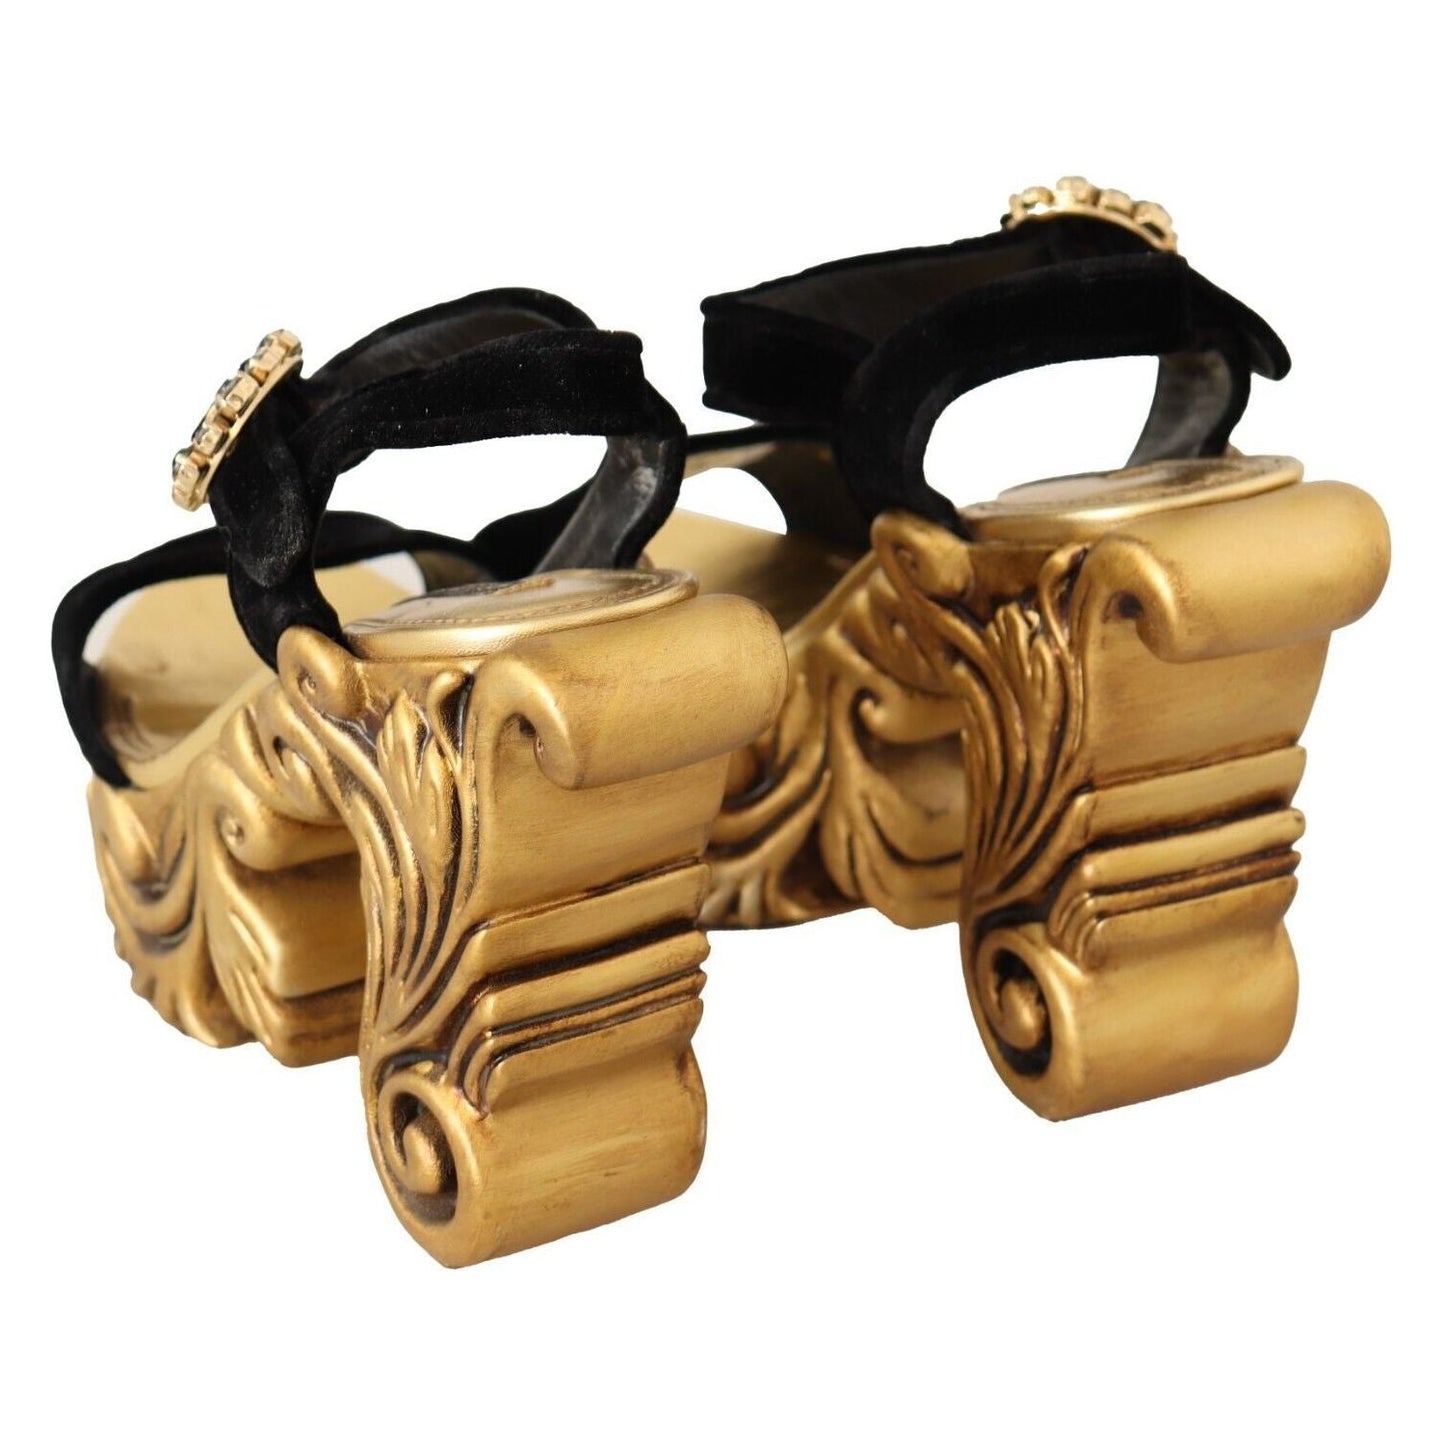 Dolce & GabbanaBaroque Velvet Heels in Black and GoldMcRichard Designer Brands£2079.00